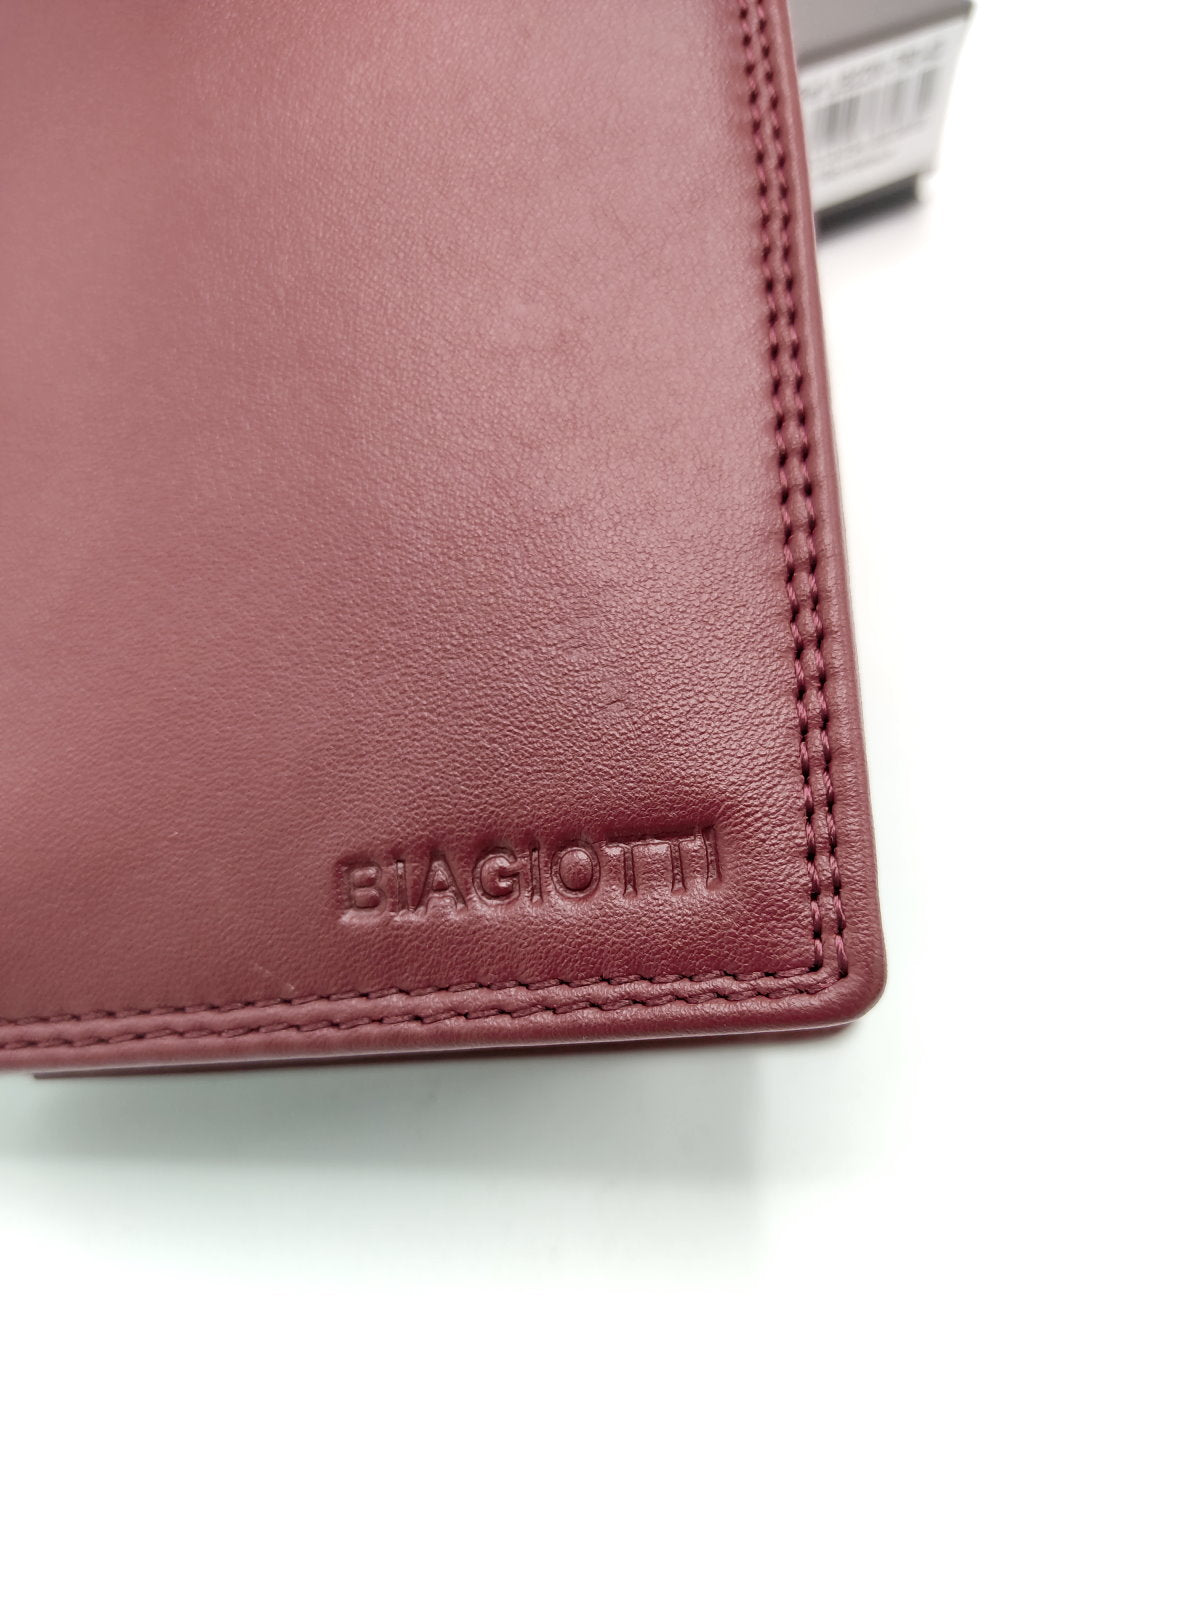 Genuine leather wallet for men, Brand Laura Biagiotti, art. LB760-43.290